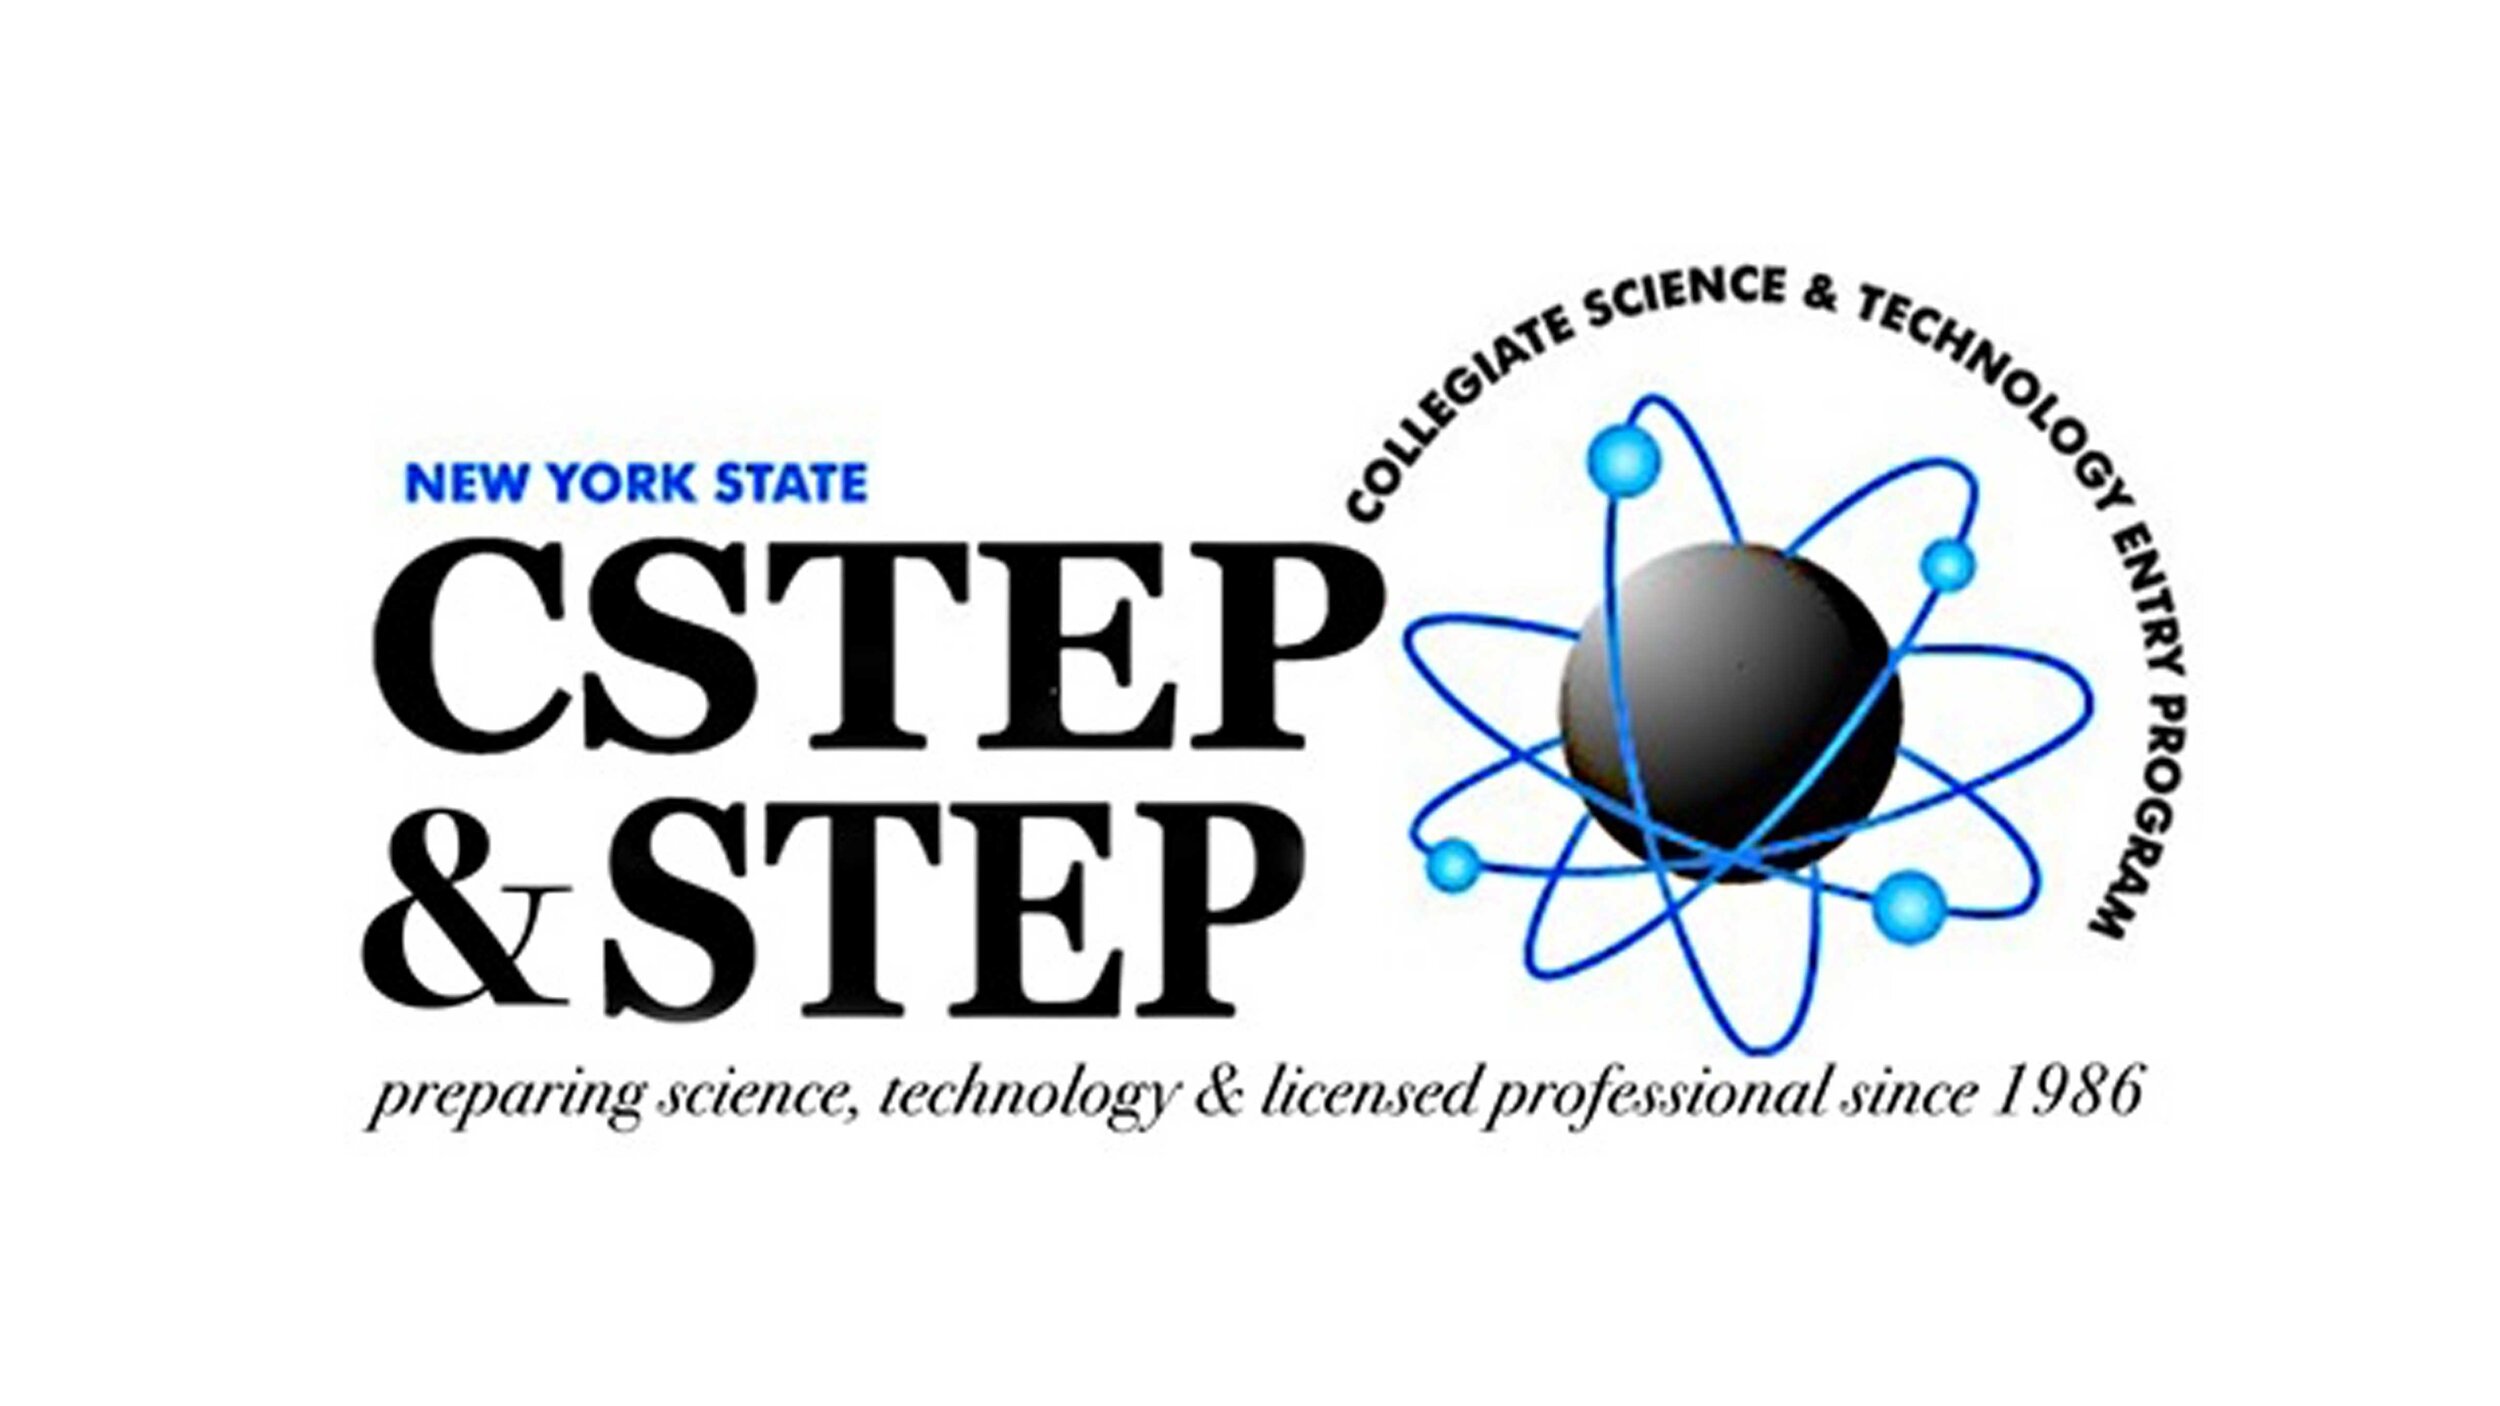 New York State CSTEP & STEP